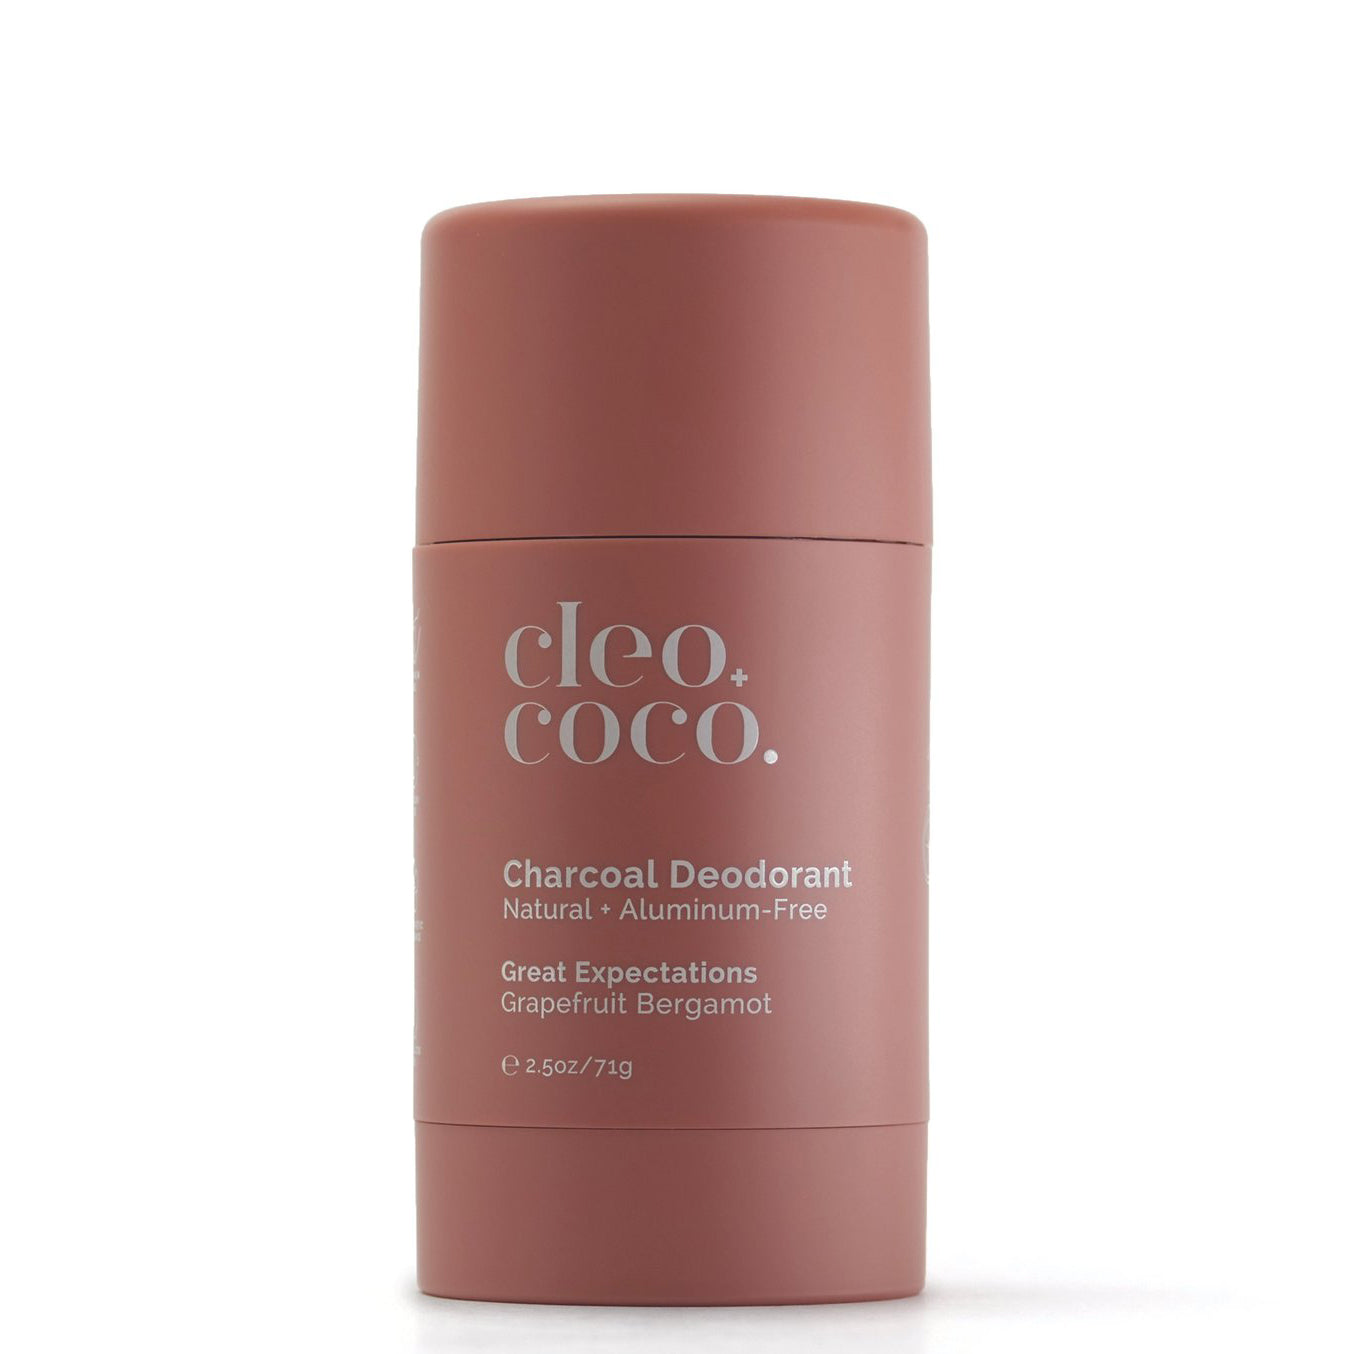 Charcoal Deodorant - Great Expectations, Grapefruit Bergamot